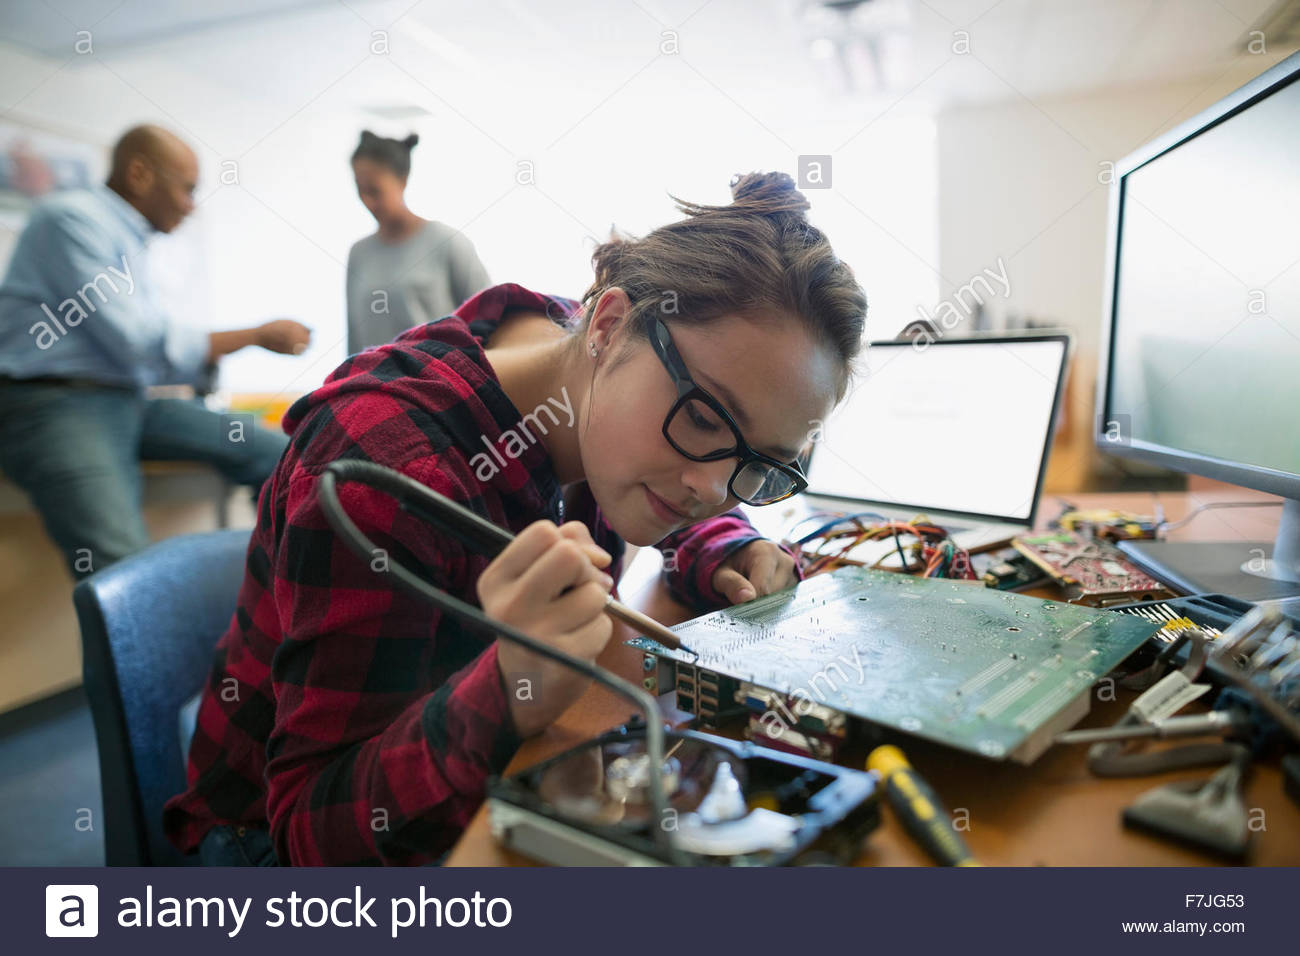 Focused high school student assembling circuit board Stock Photo